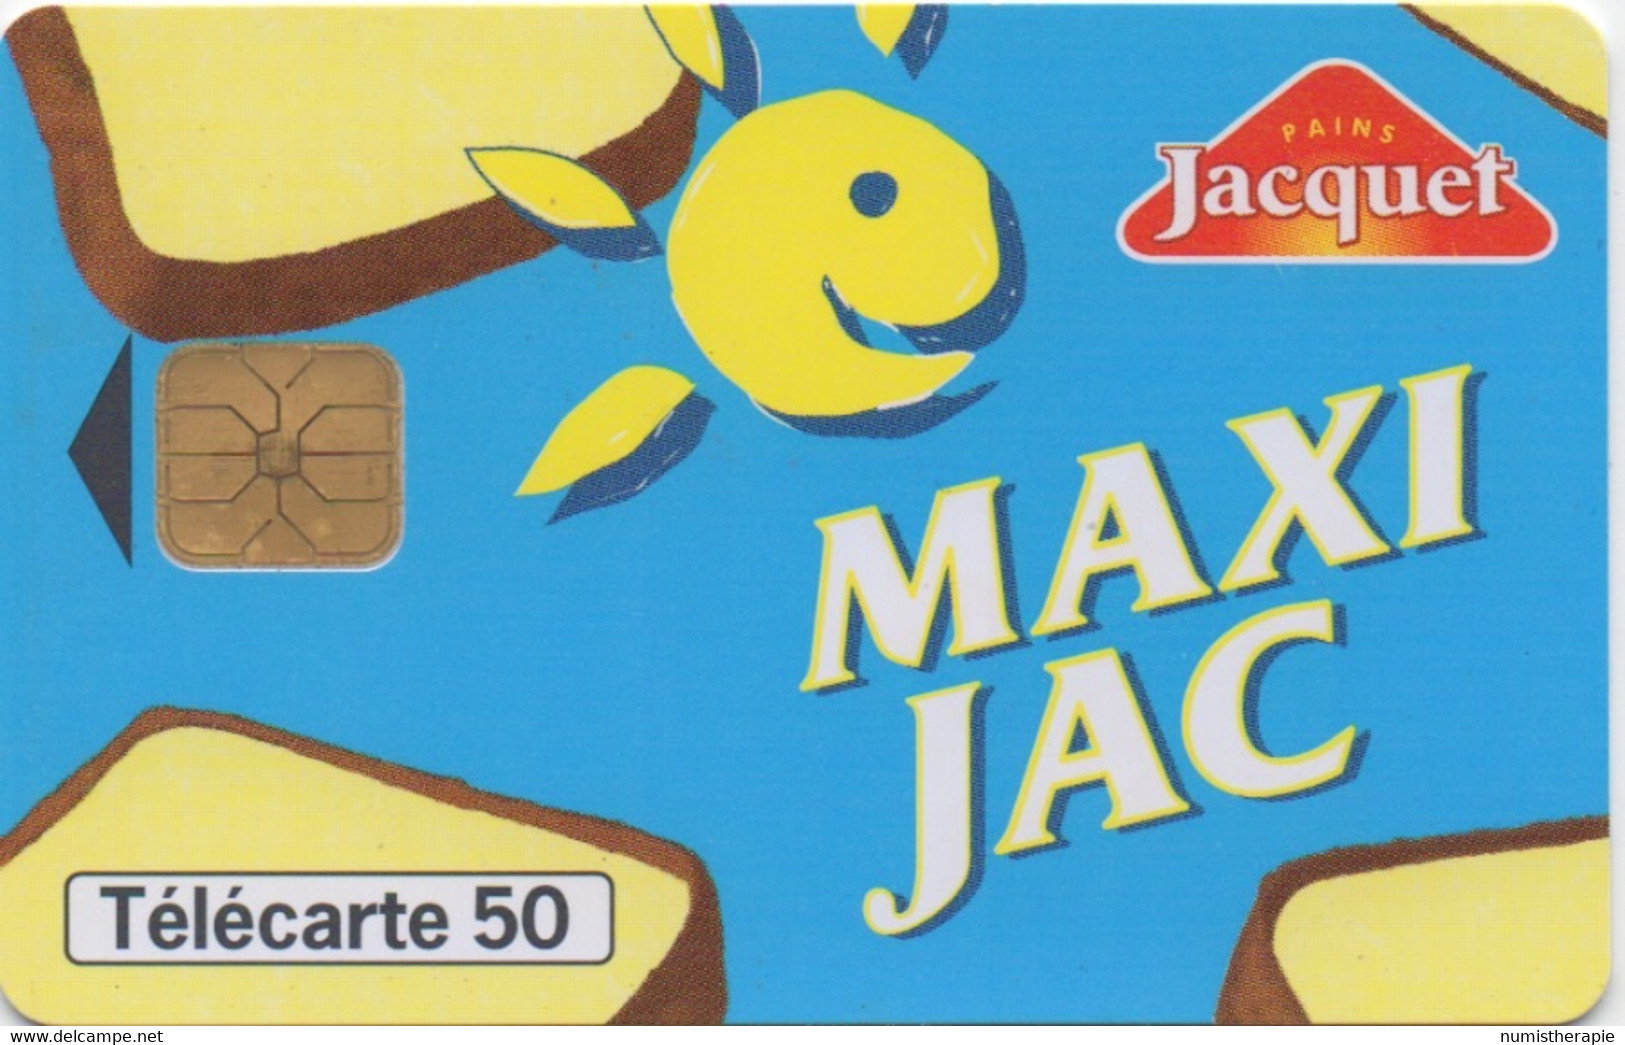 Pains Jacquet Maxi Jac 1999 - Levensmiddelen